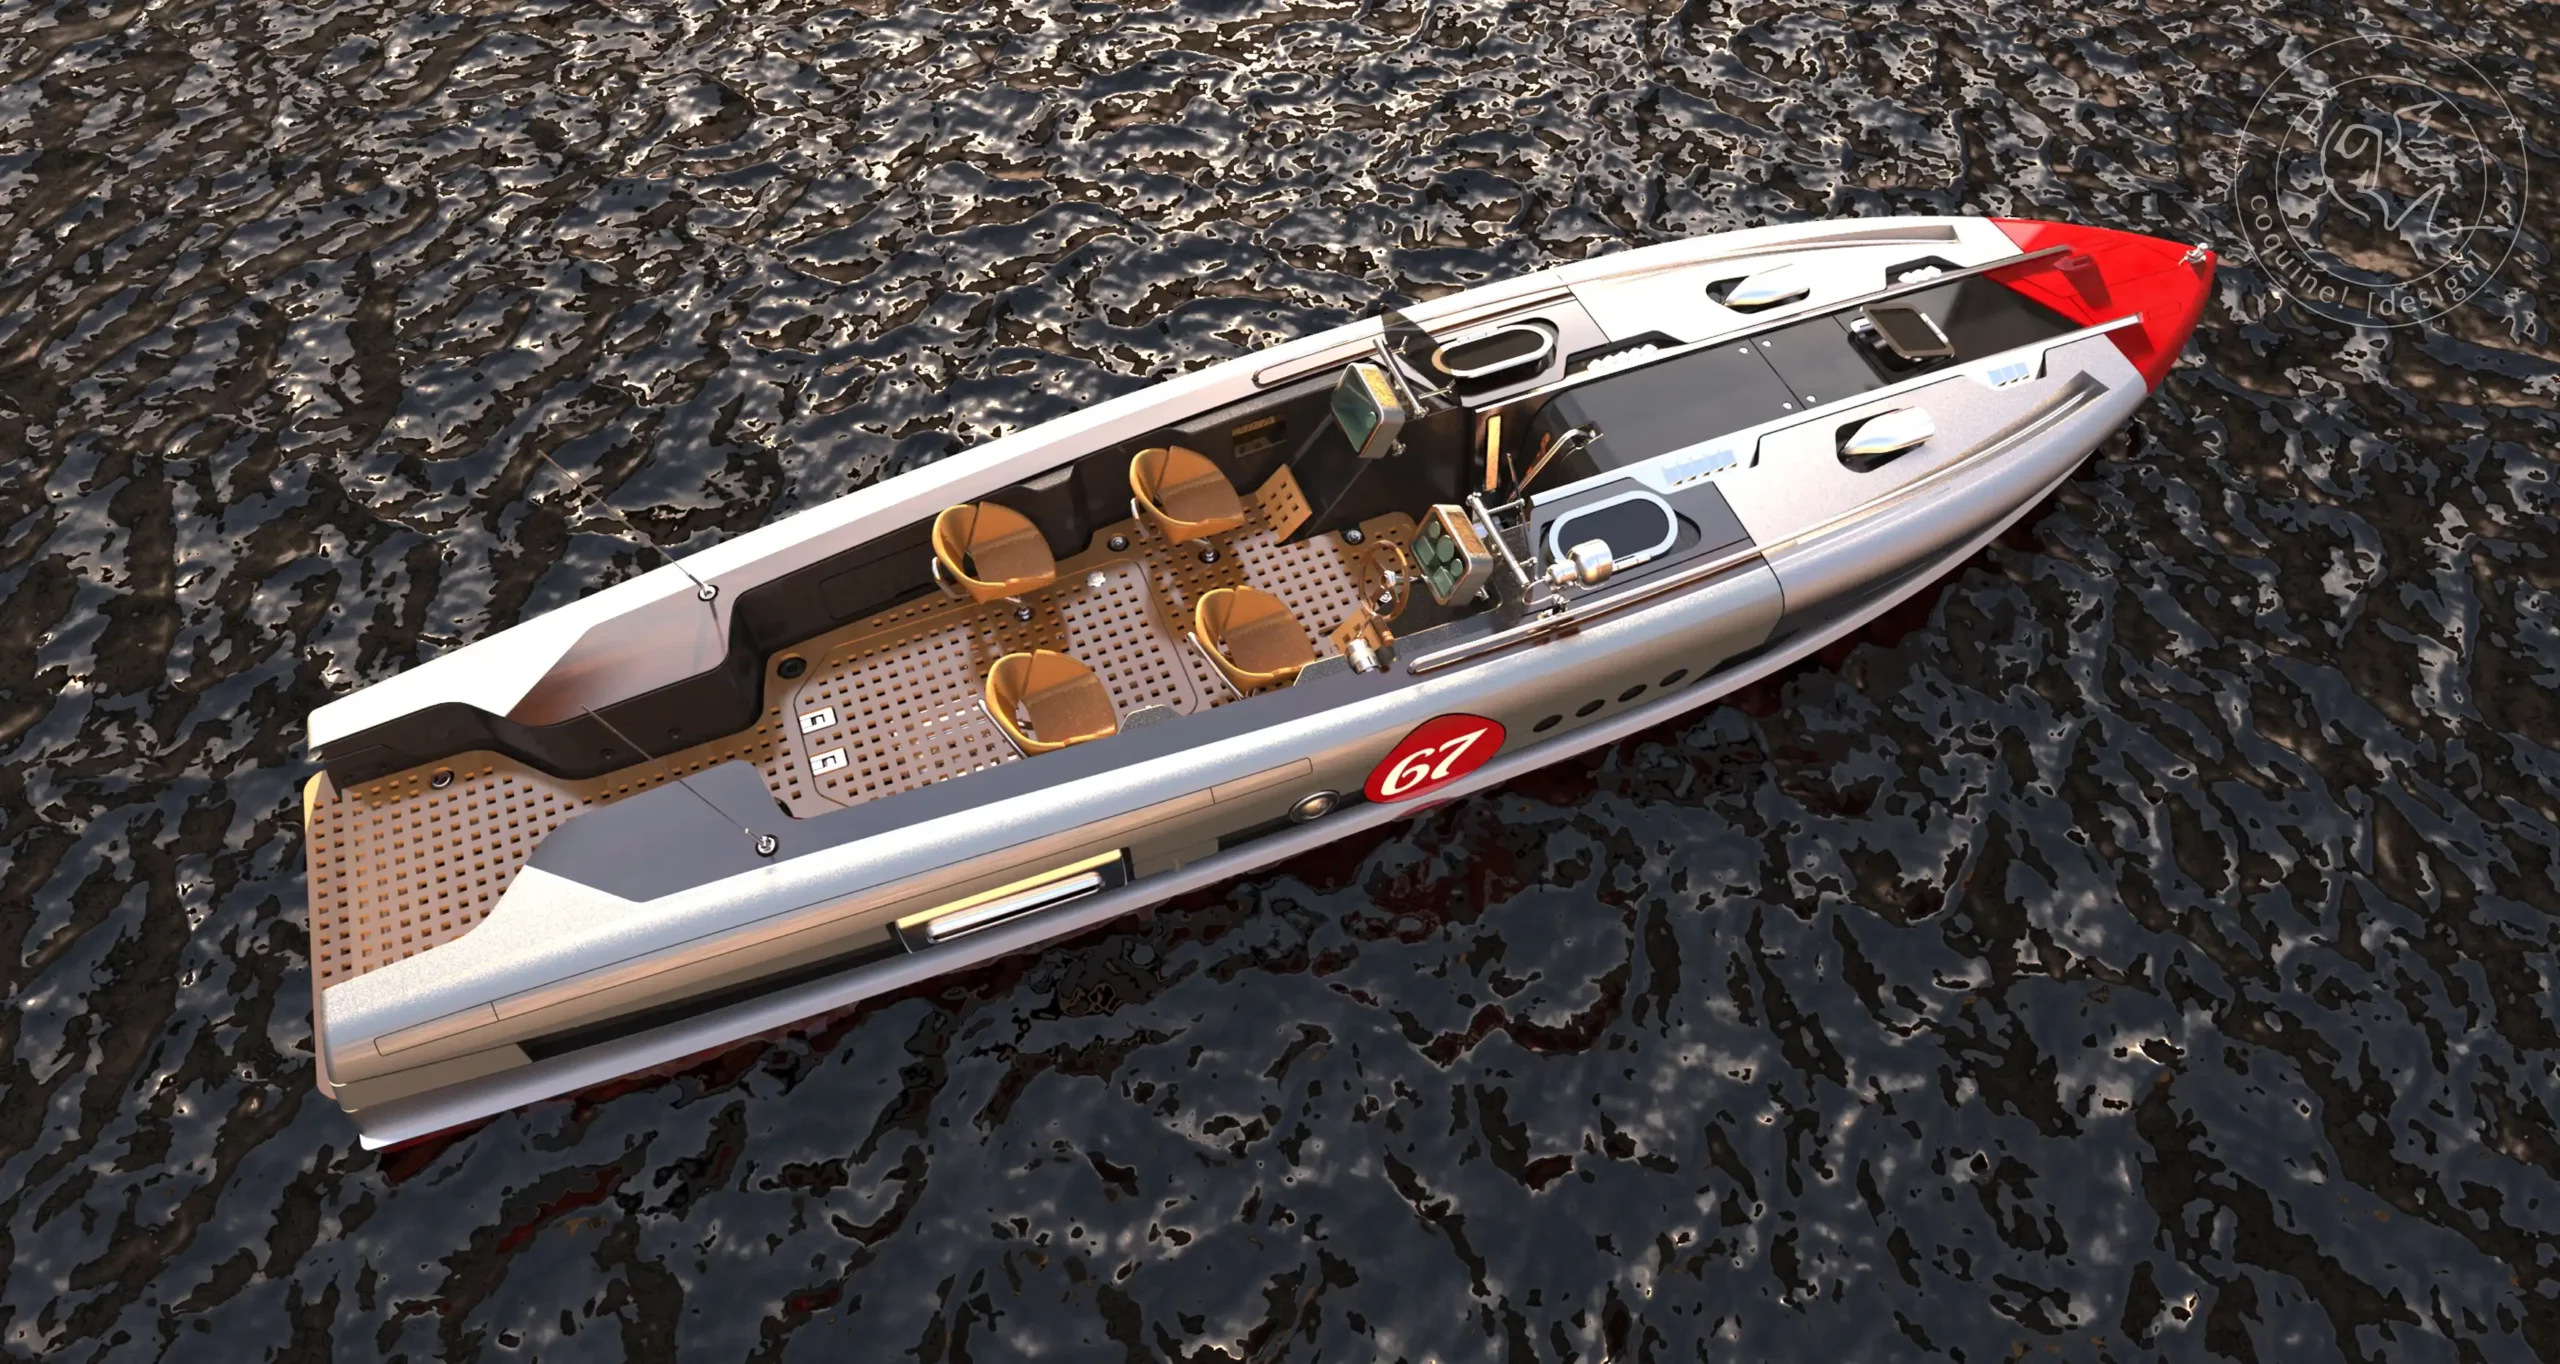 Marine luxury yatch 3d model